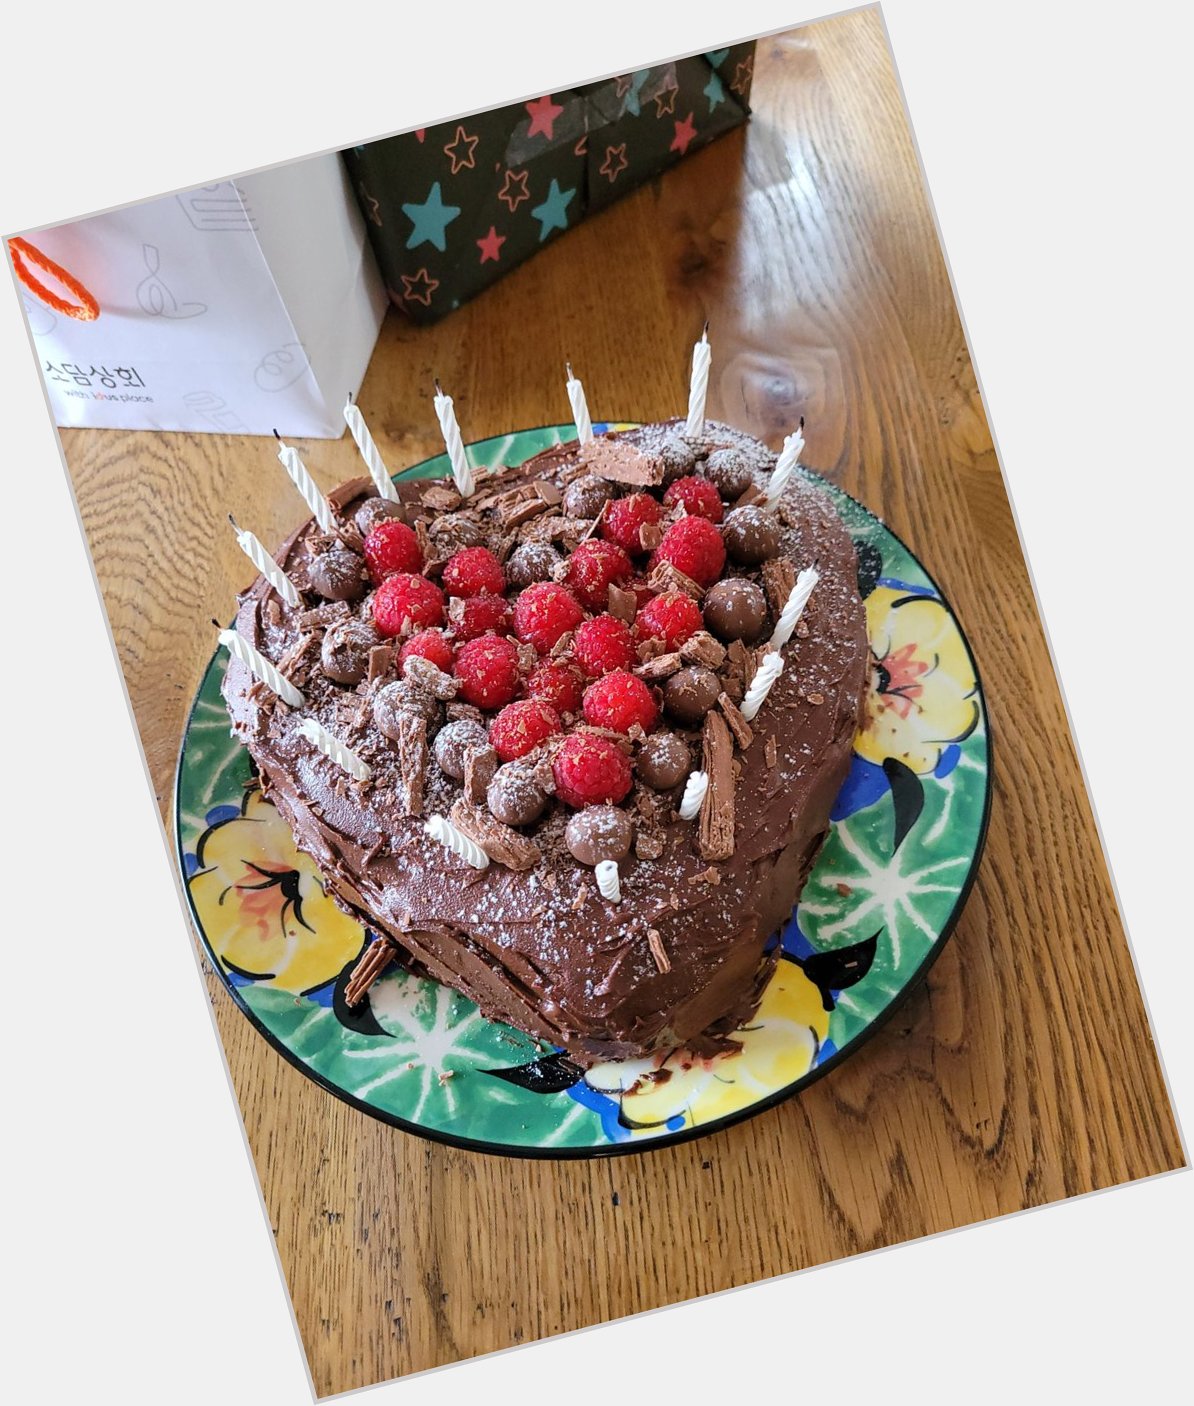 Happy birthday to Miss 14. Jamie Oliver\s choc orange birthday cake was da bomb. 